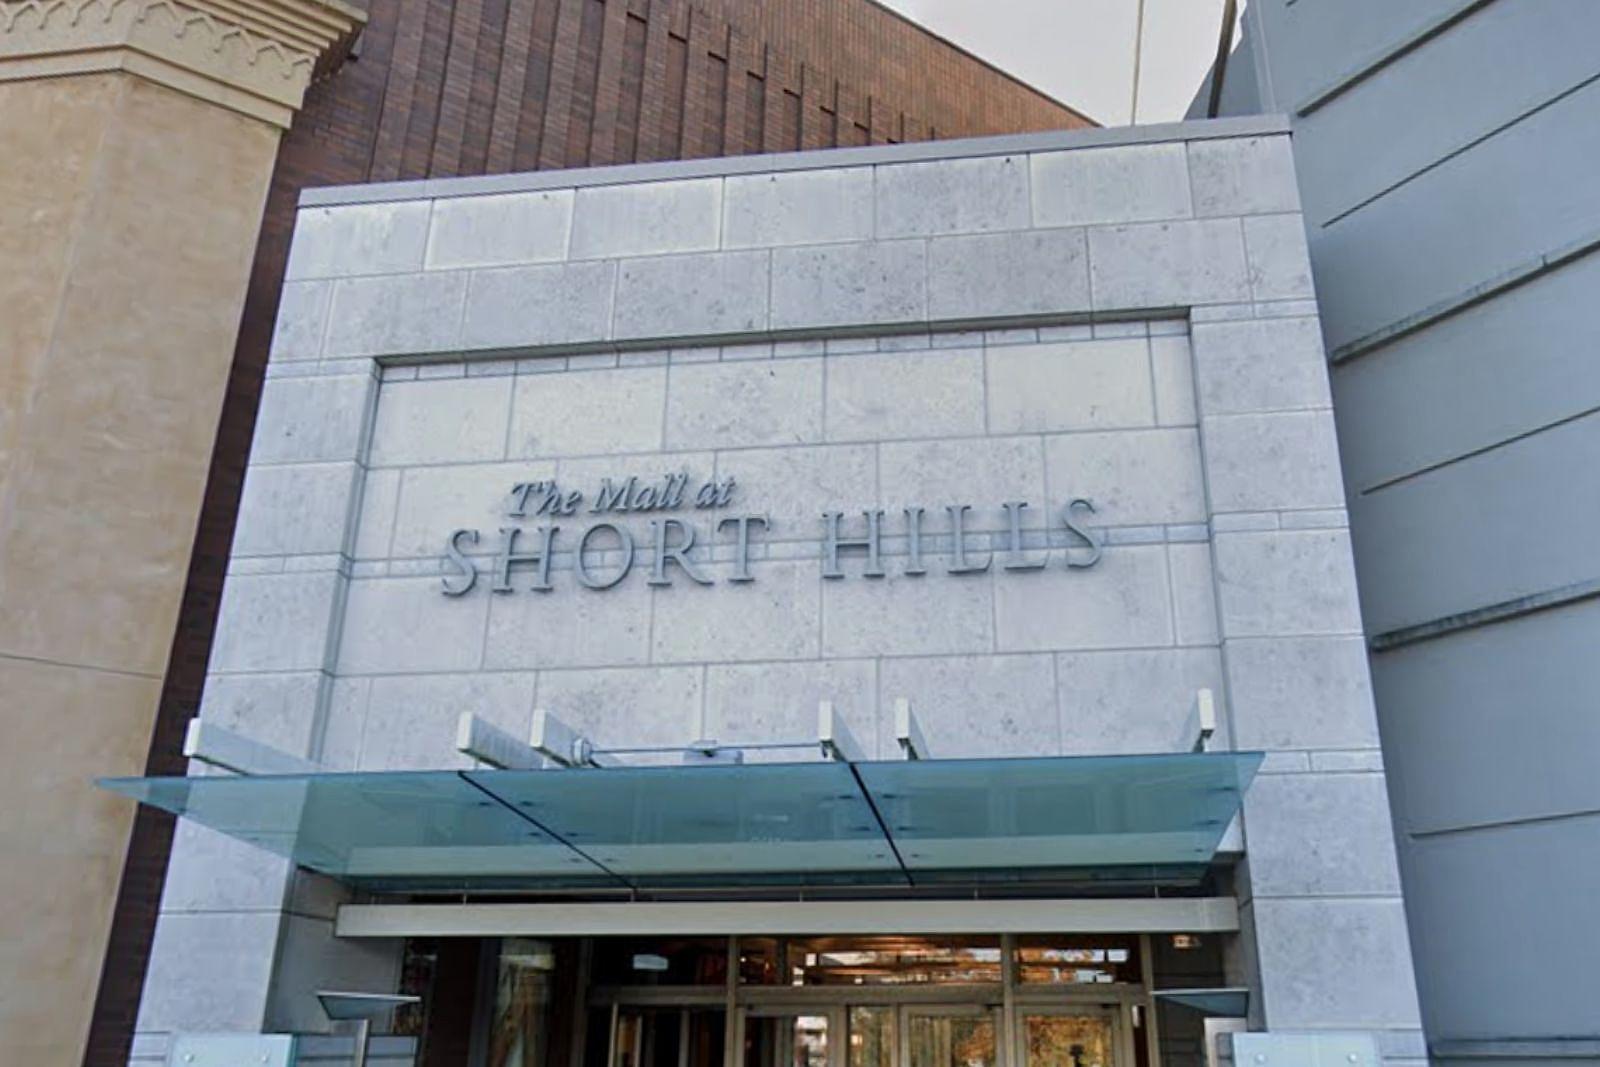 short hills mall outside